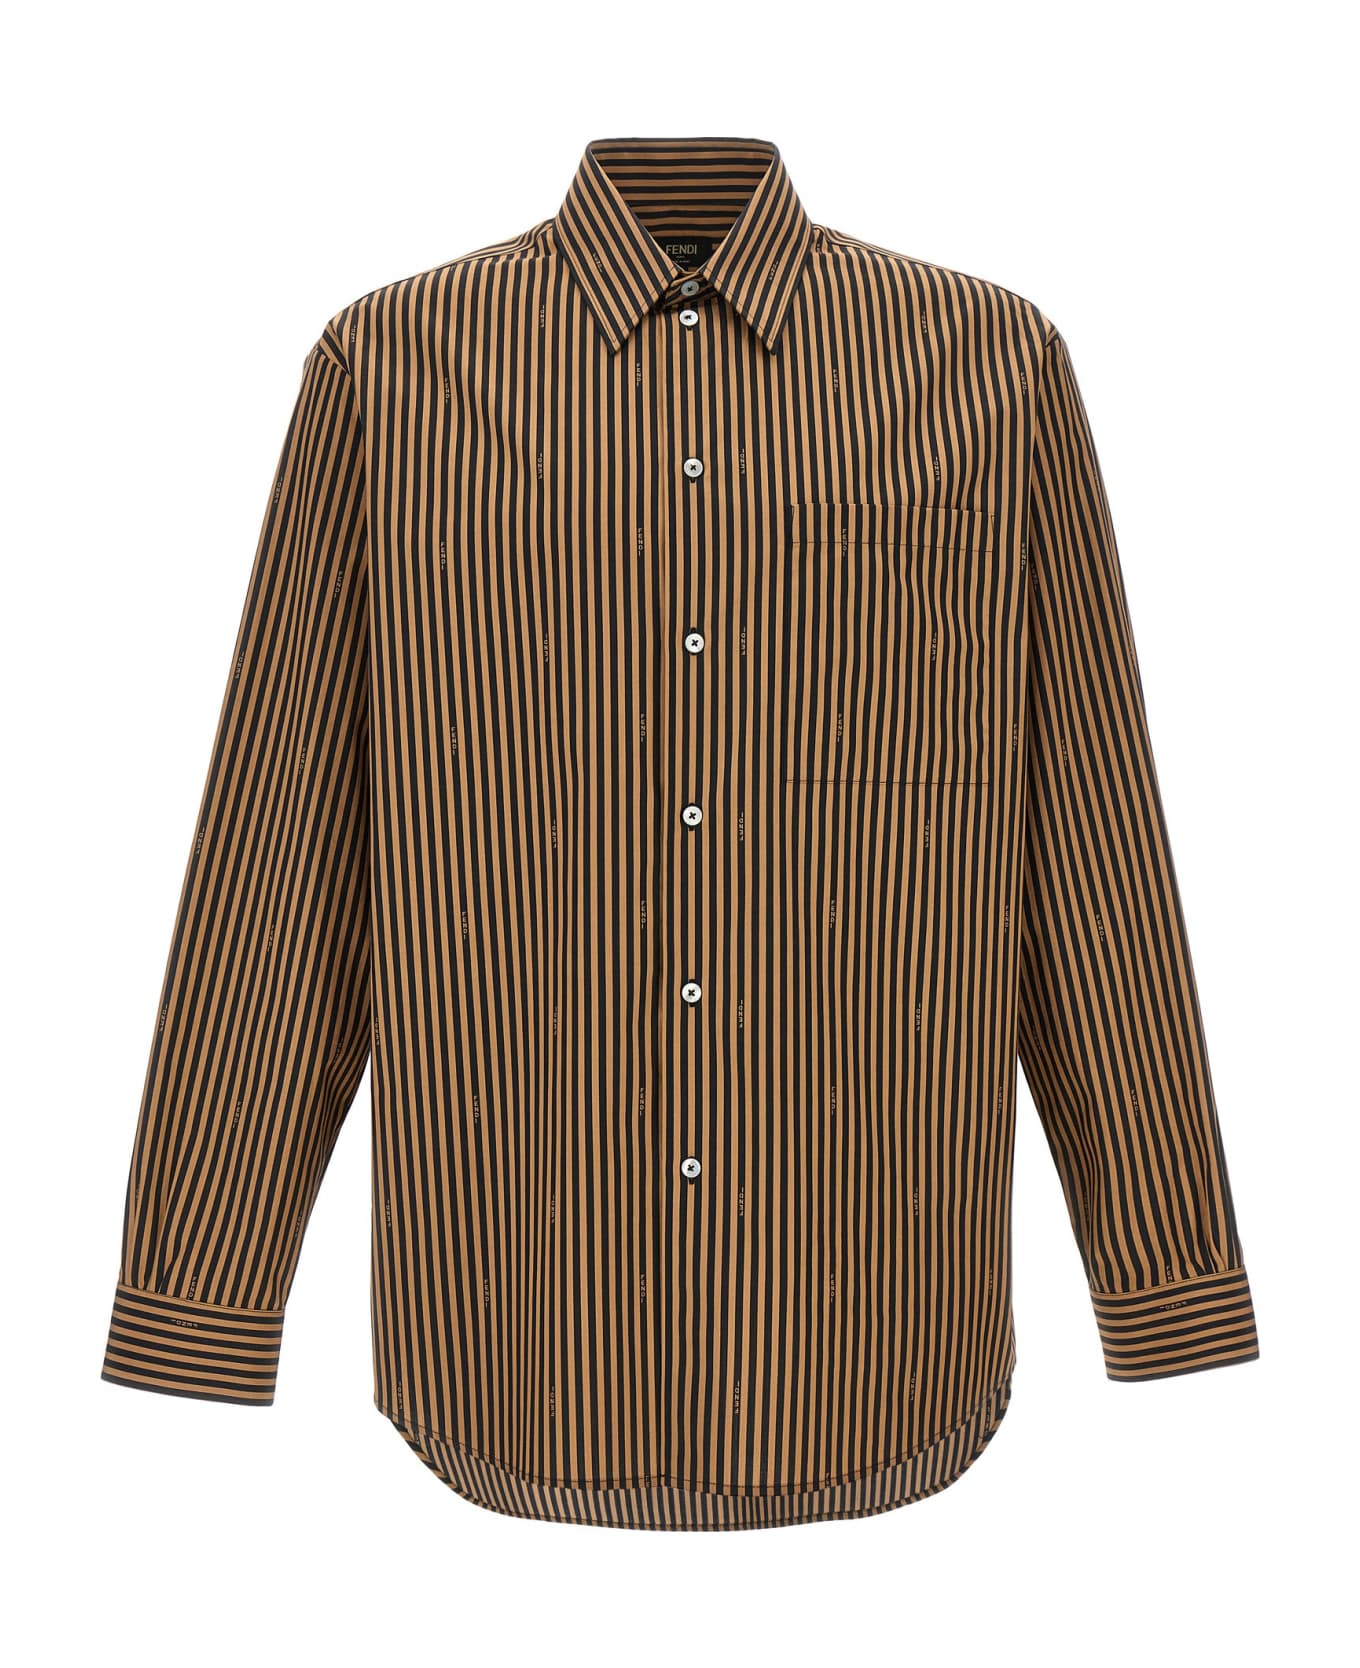 Fendi Pequin Stripes Shirt - Brown